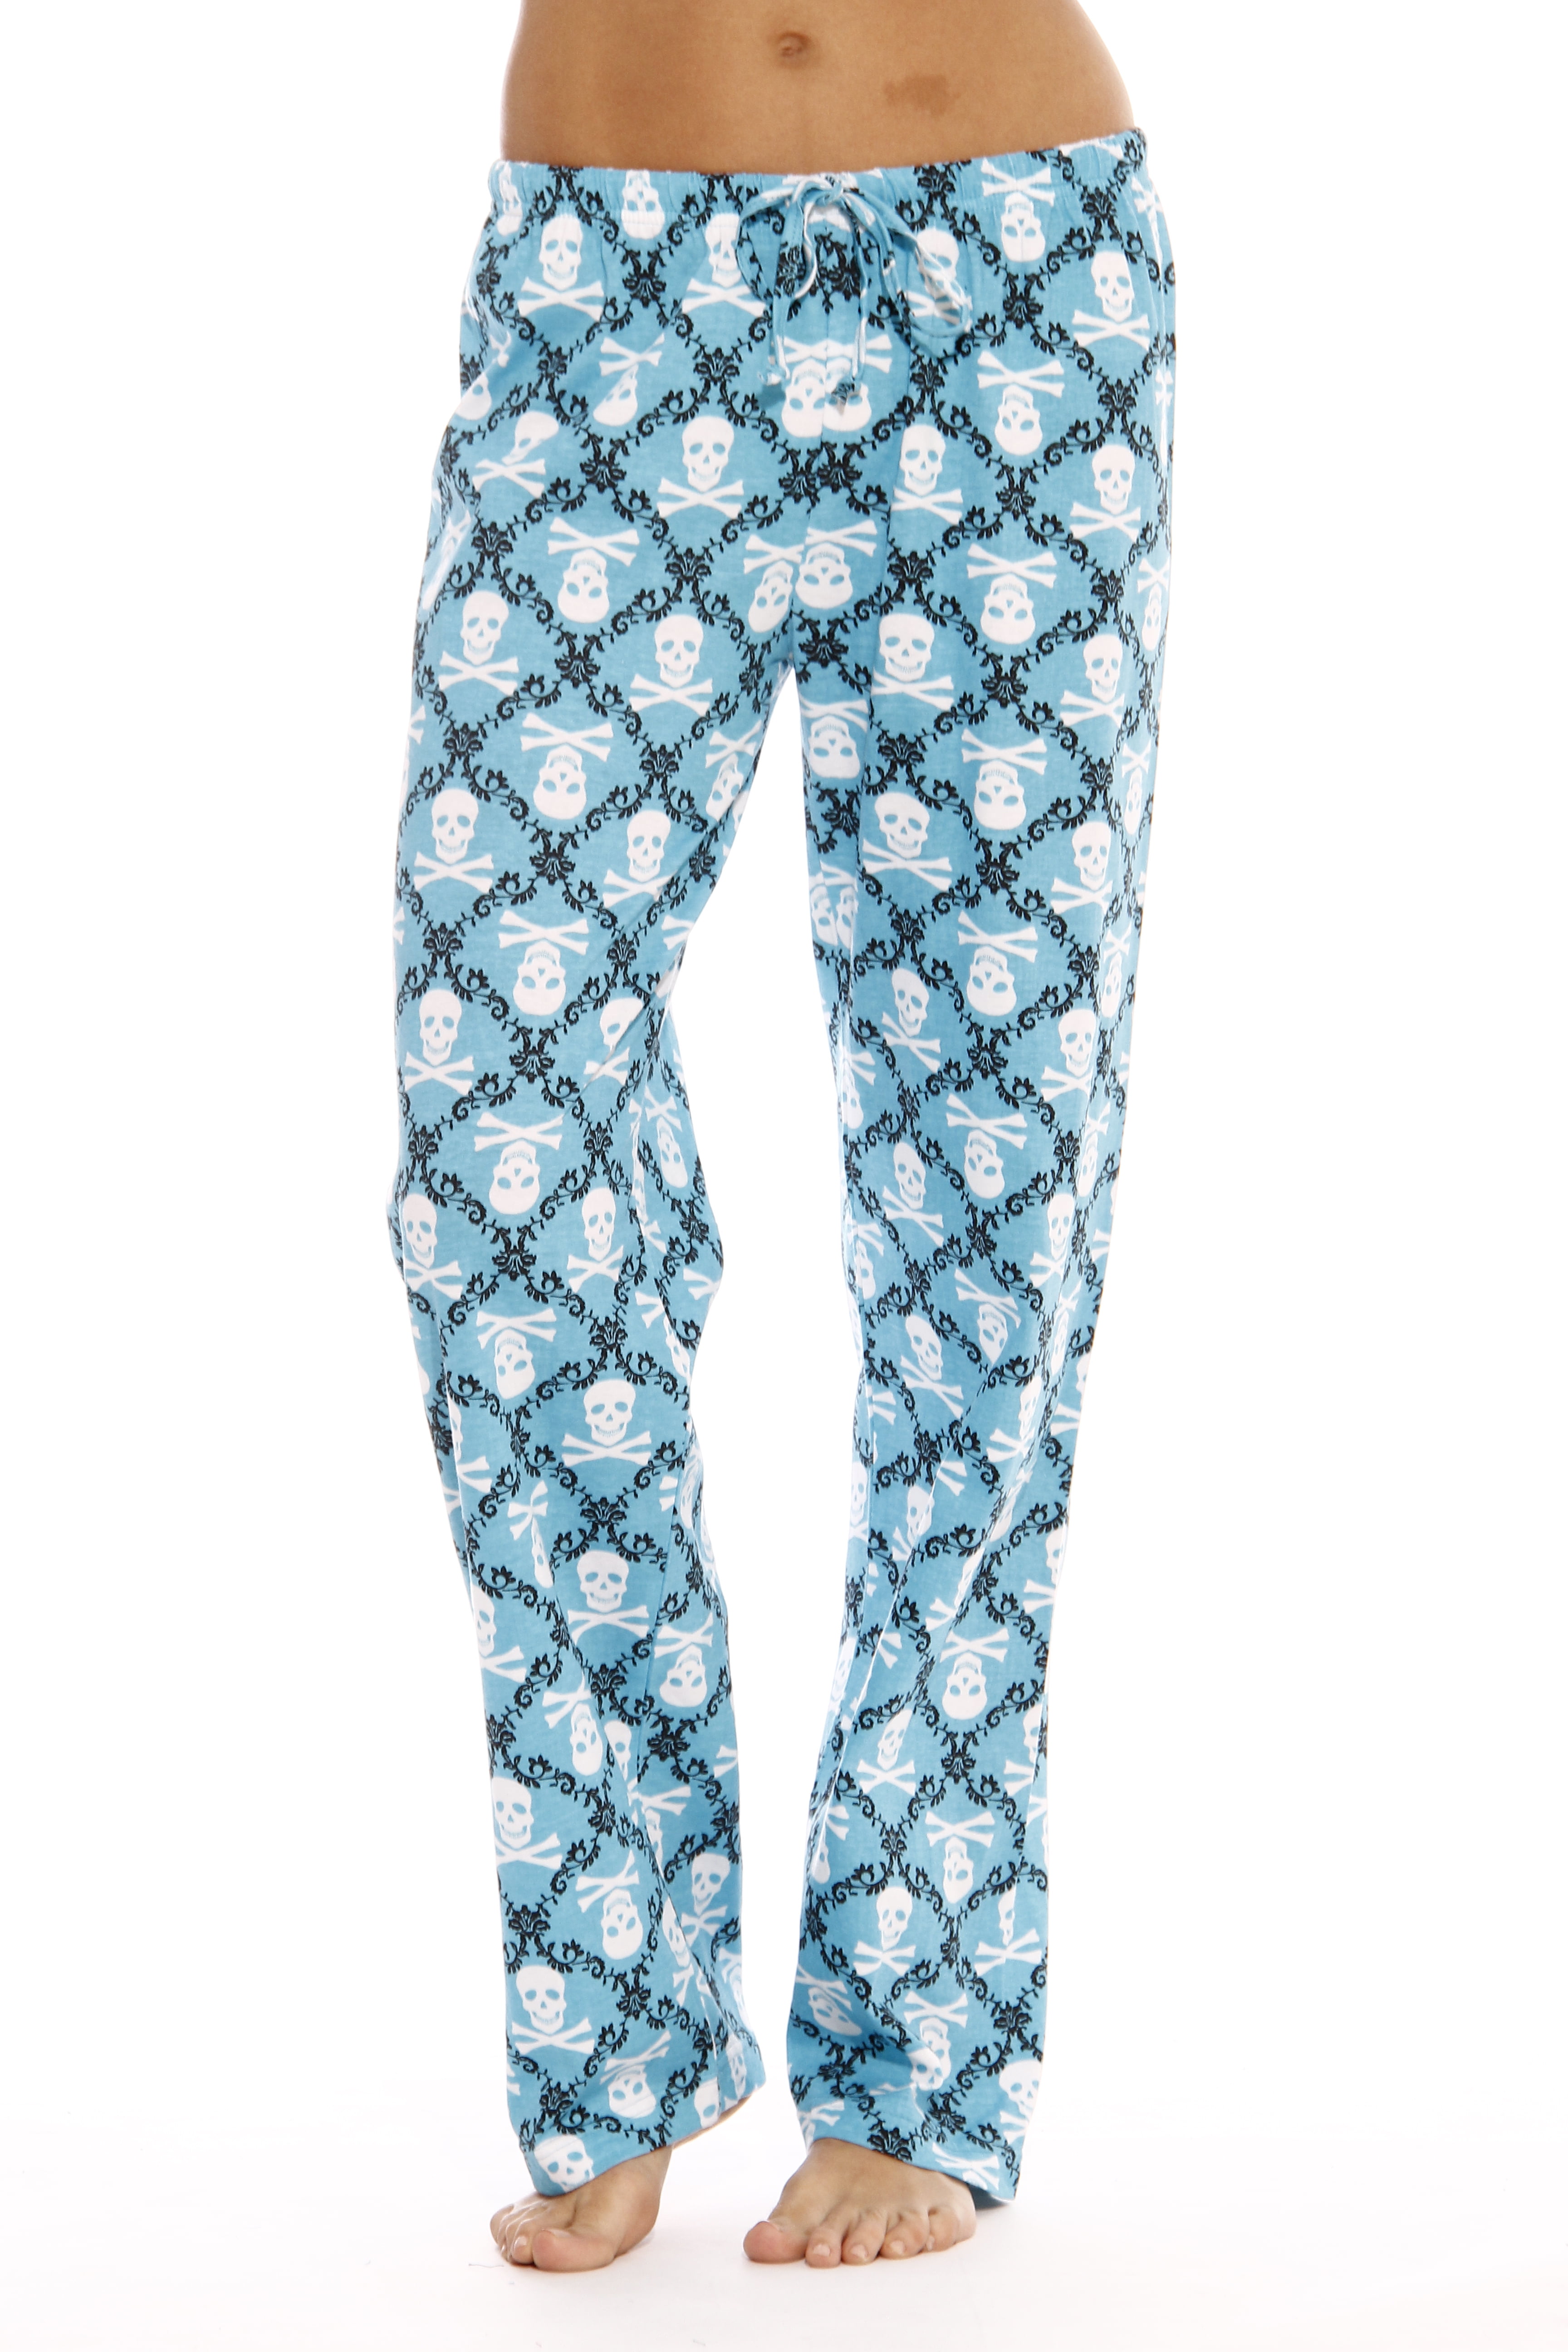 Women Pajama Pants / Sleepwear (Skulls Blue, 3X) - Walmart.com